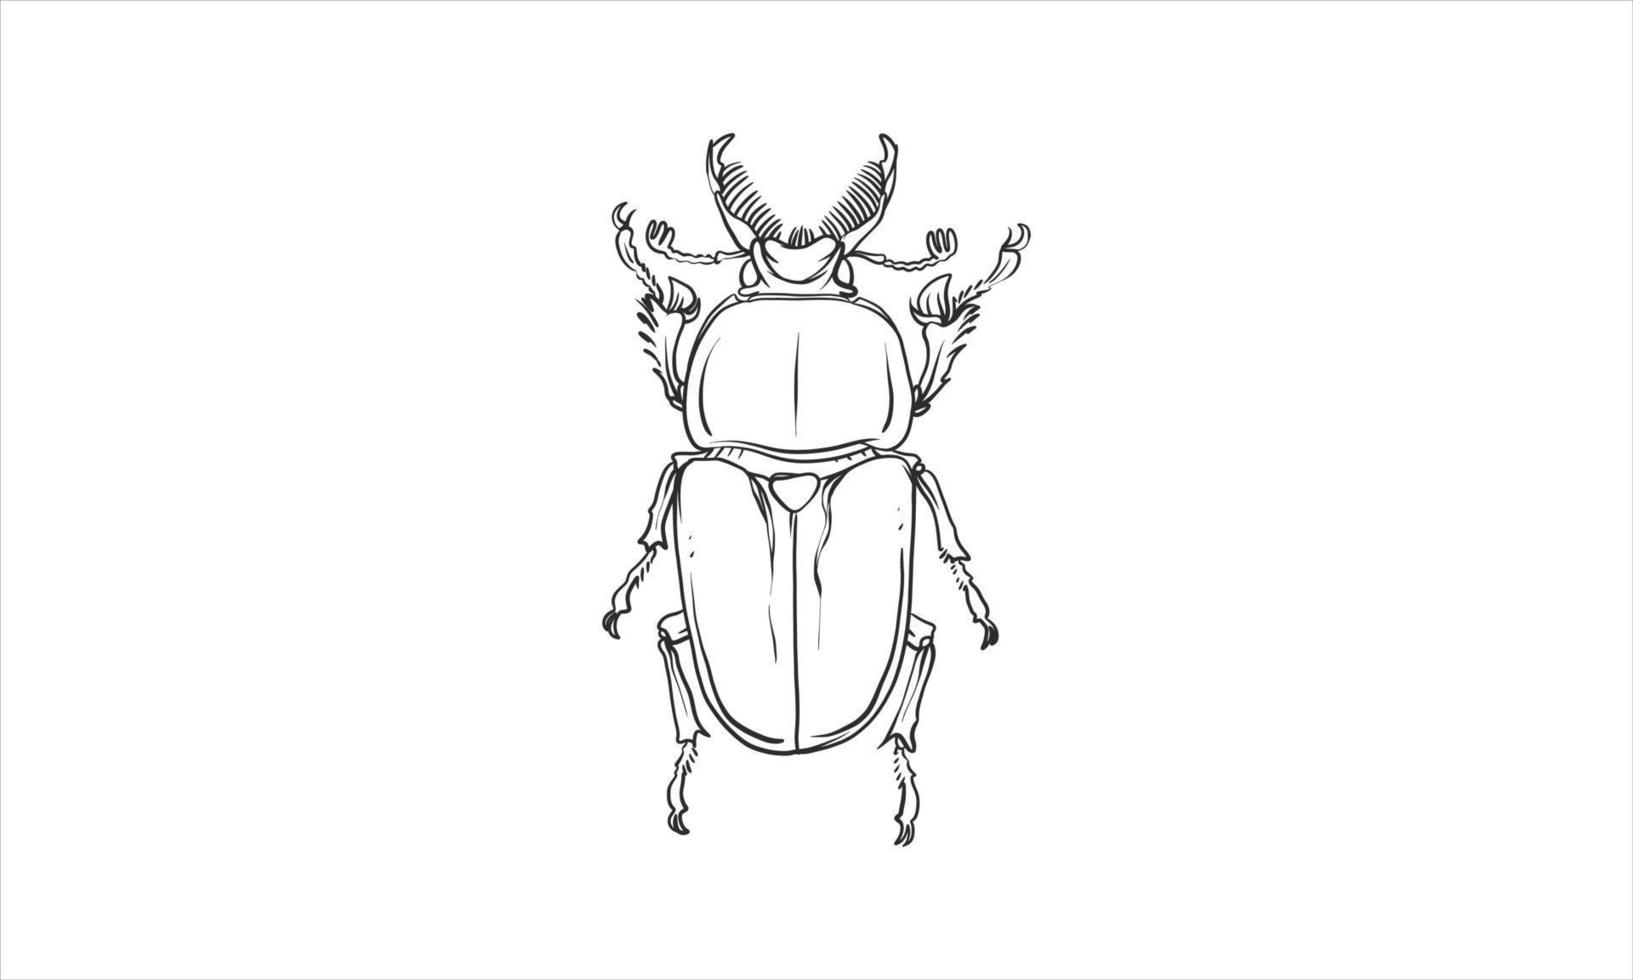 vektor lineart illustration av skalbaggar på vit bakgrund, handritad japansk behornad skalbagge insekt insekt skiss